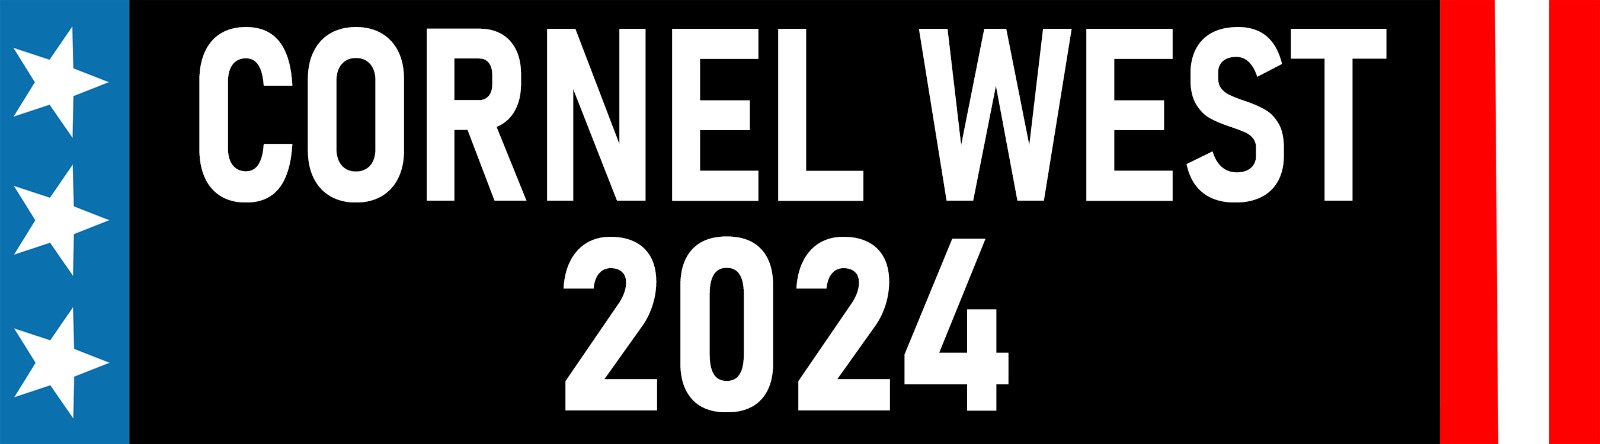 Cornel West 2024 Sticker West for President Bumper Sticker Elect Cornel West